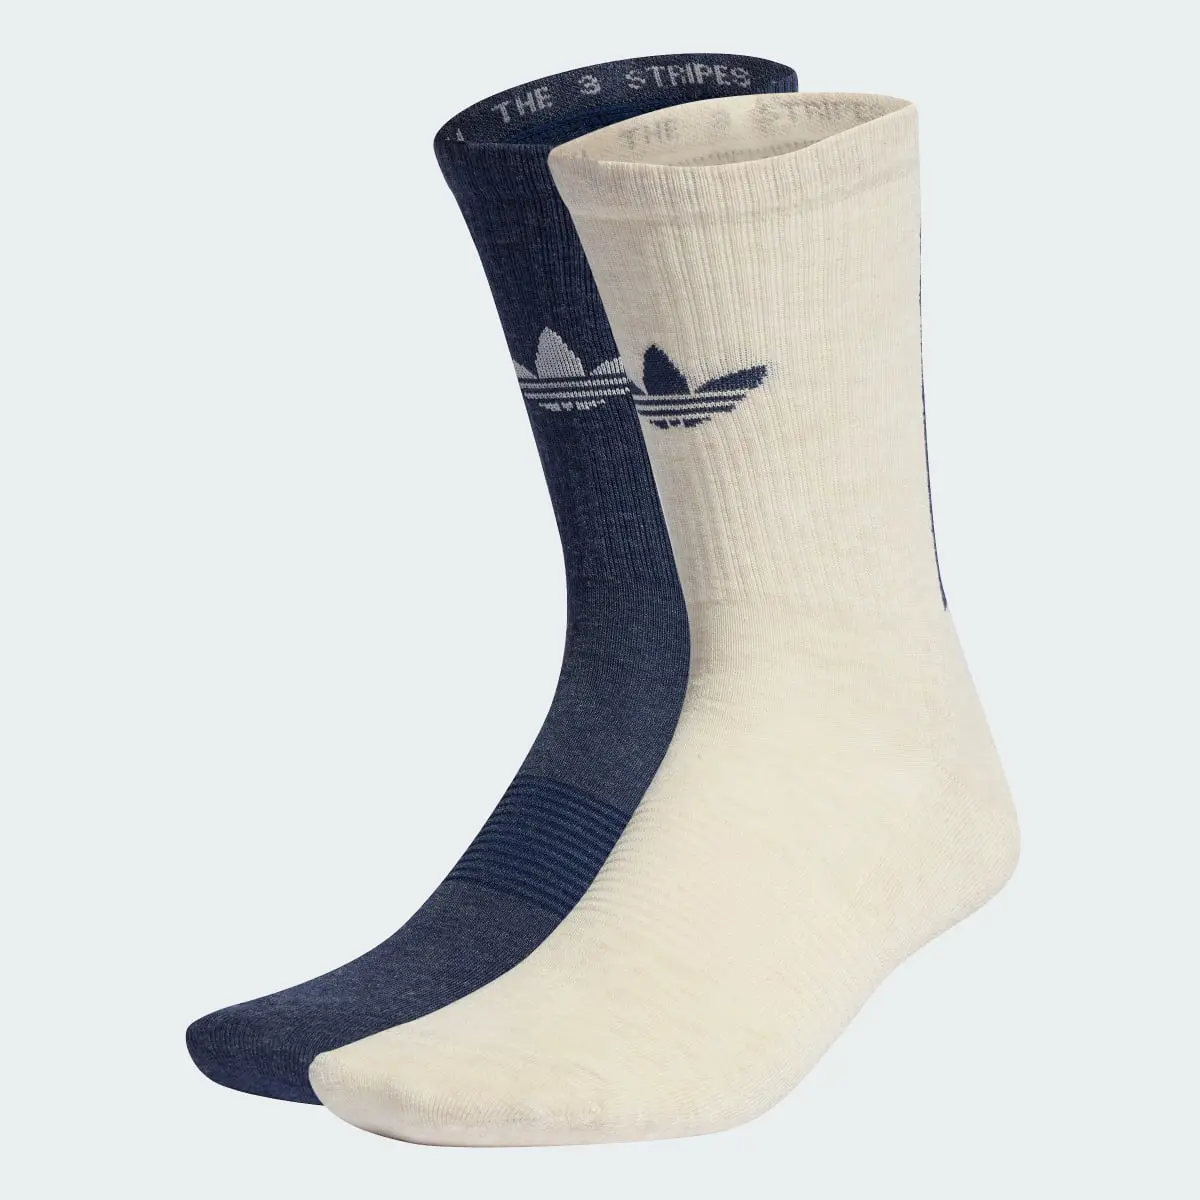 Adidas Trefoil Premium Crew Socken, 2 Paar. 2